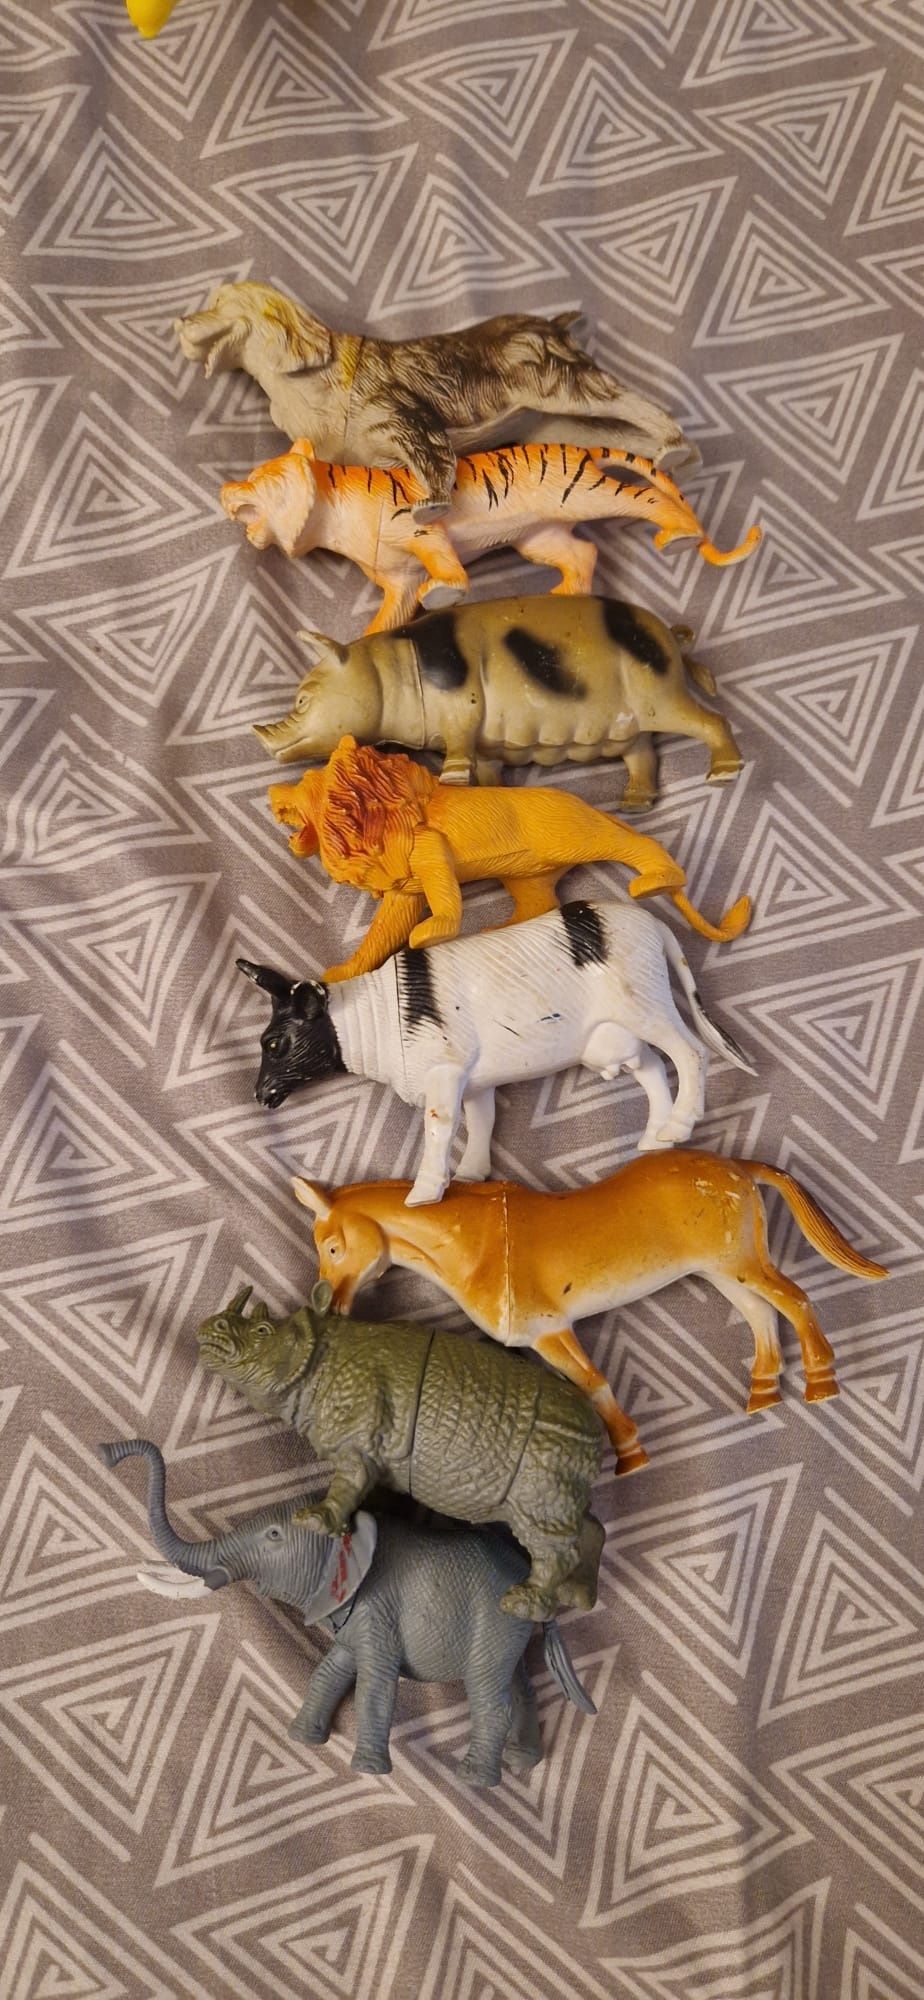 Lot de dinozauri